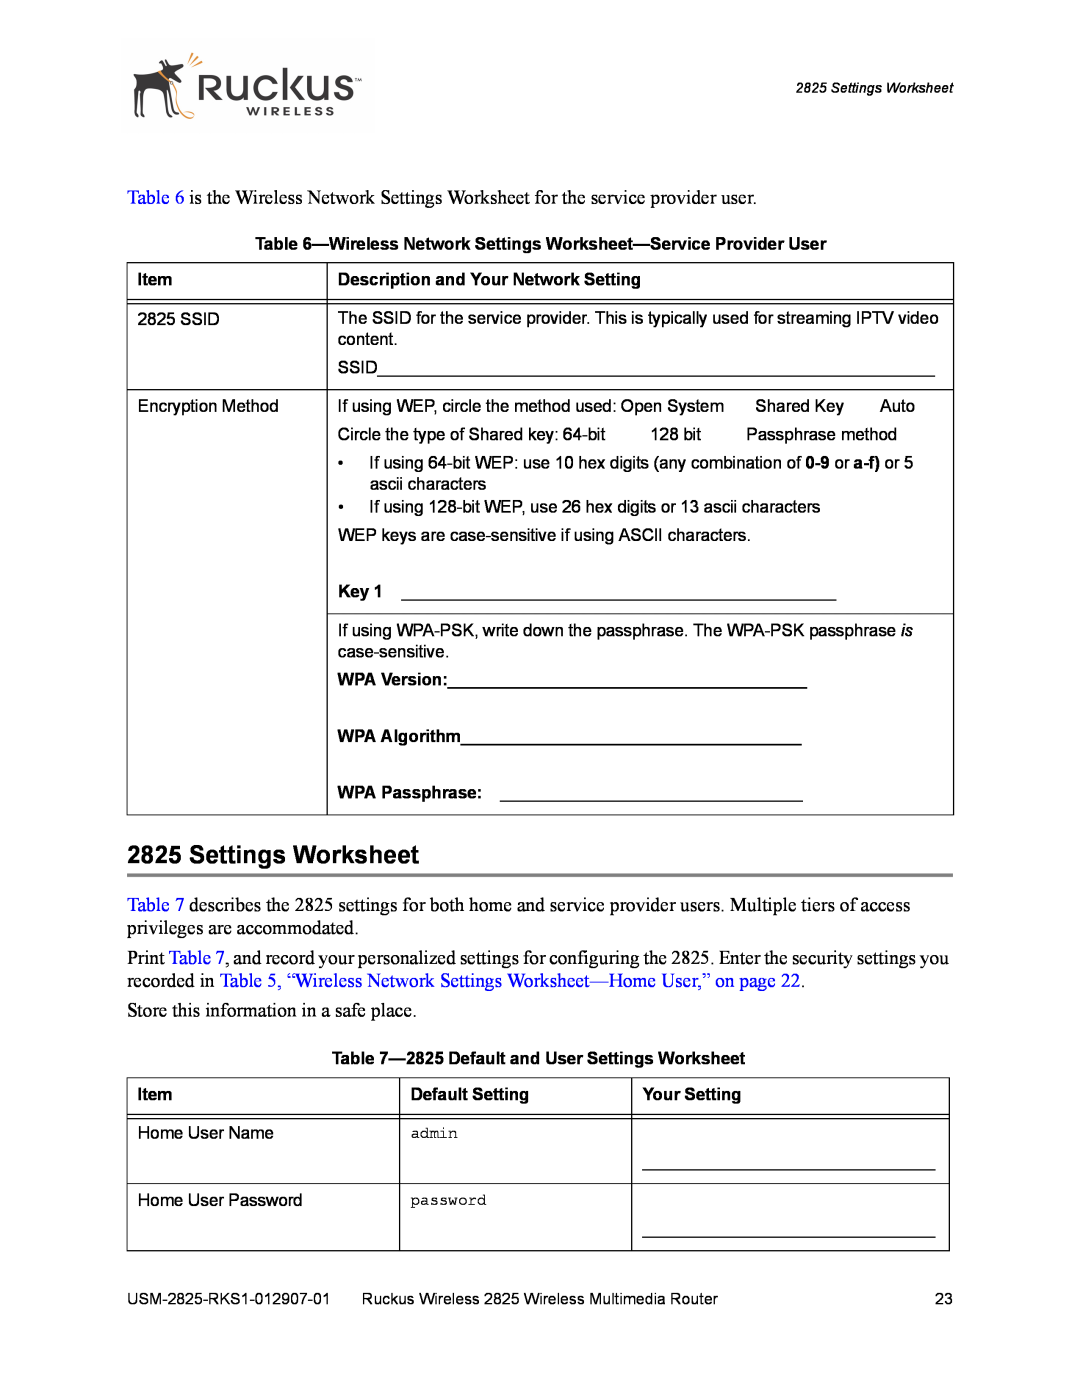 Ruckus Wireless 2111, 2825 manual Settings Worksheet 